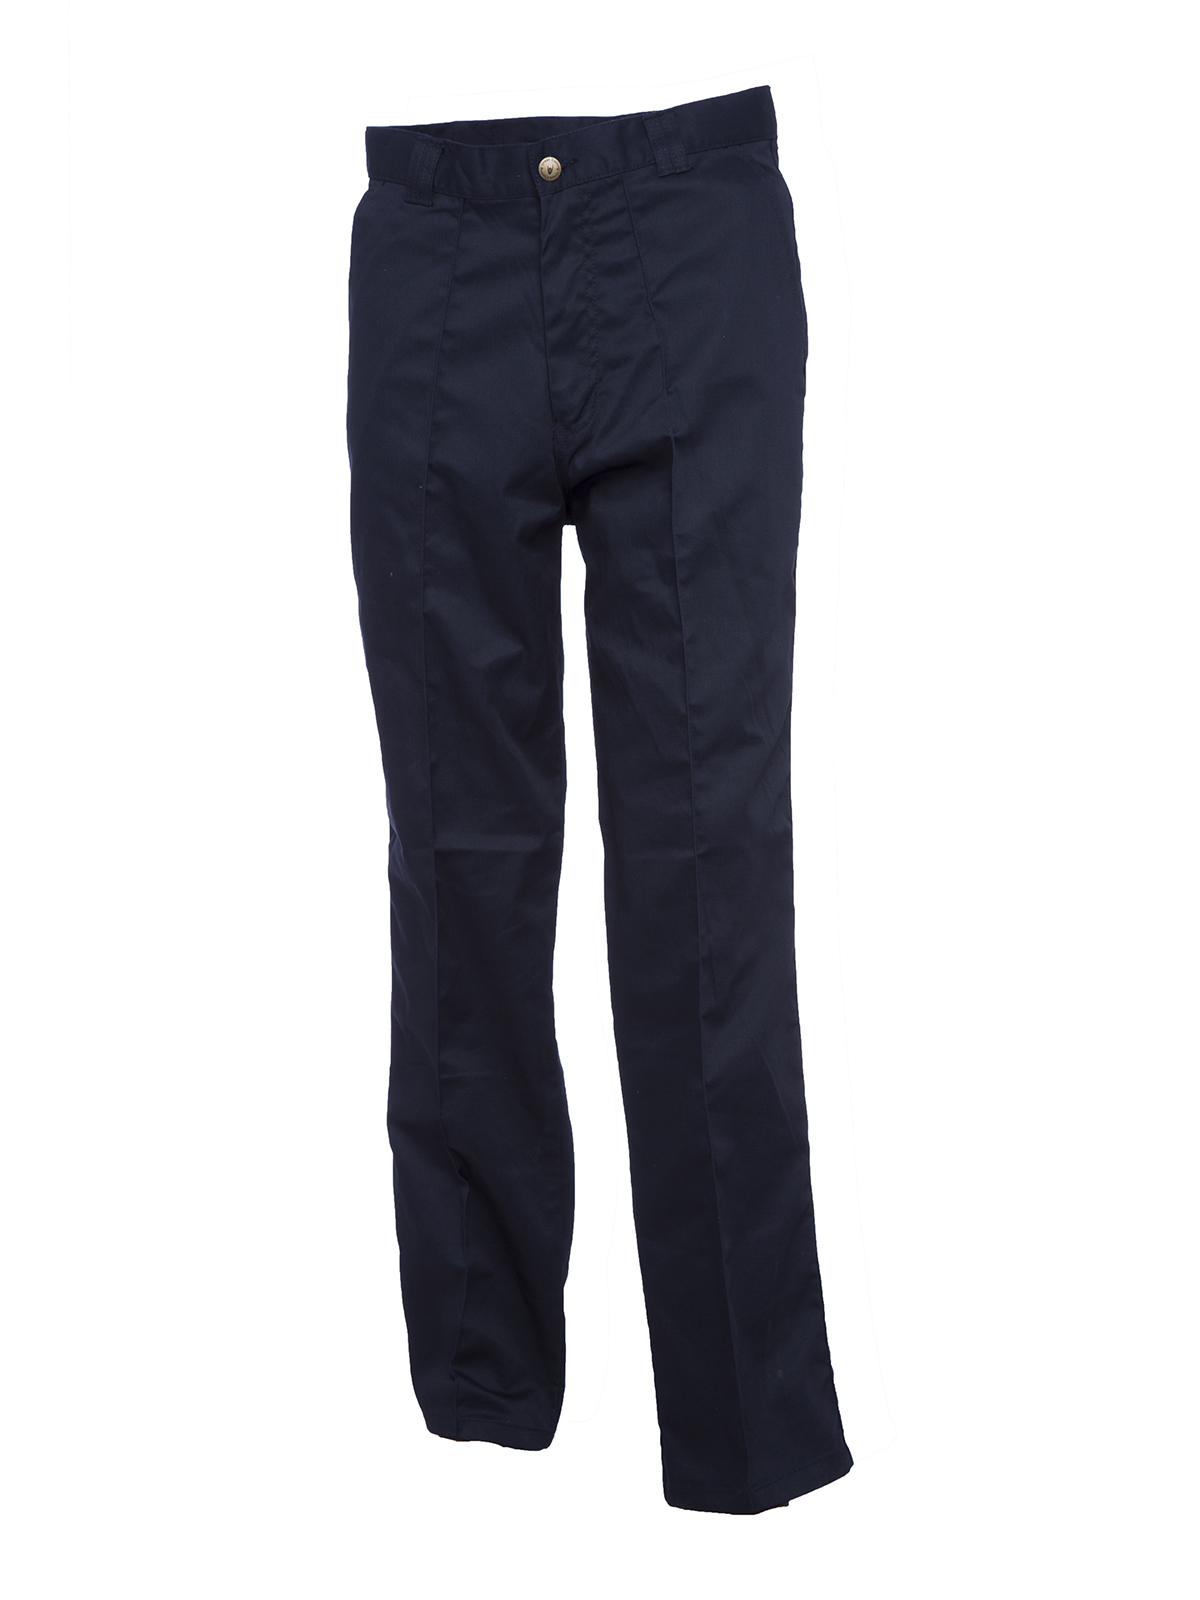 Workwear Trousers, Navy Blue - 48L